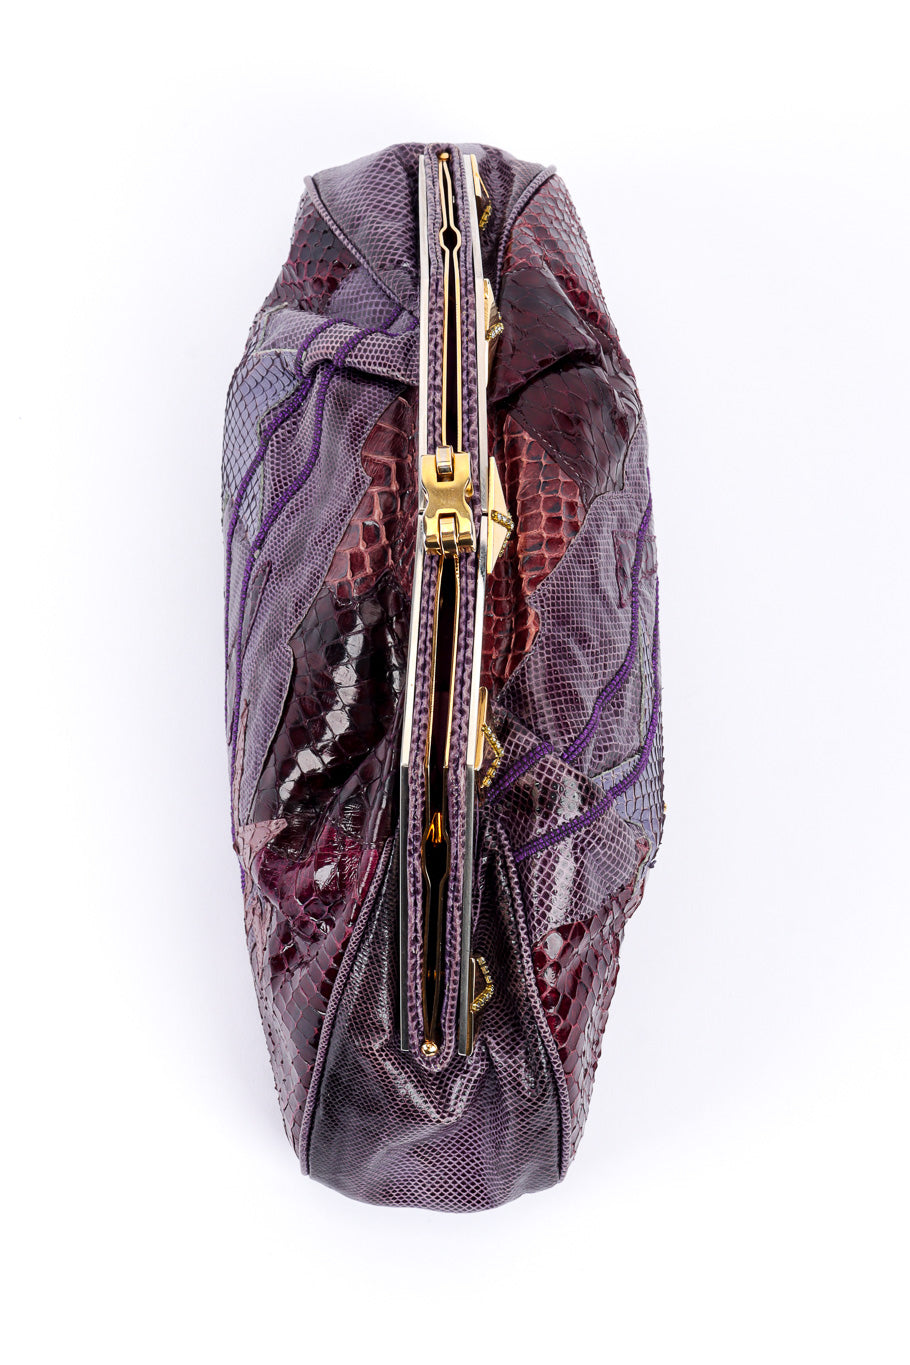 Snake & Lizard Star Collage Bag by Carlo Fiori top @recessla